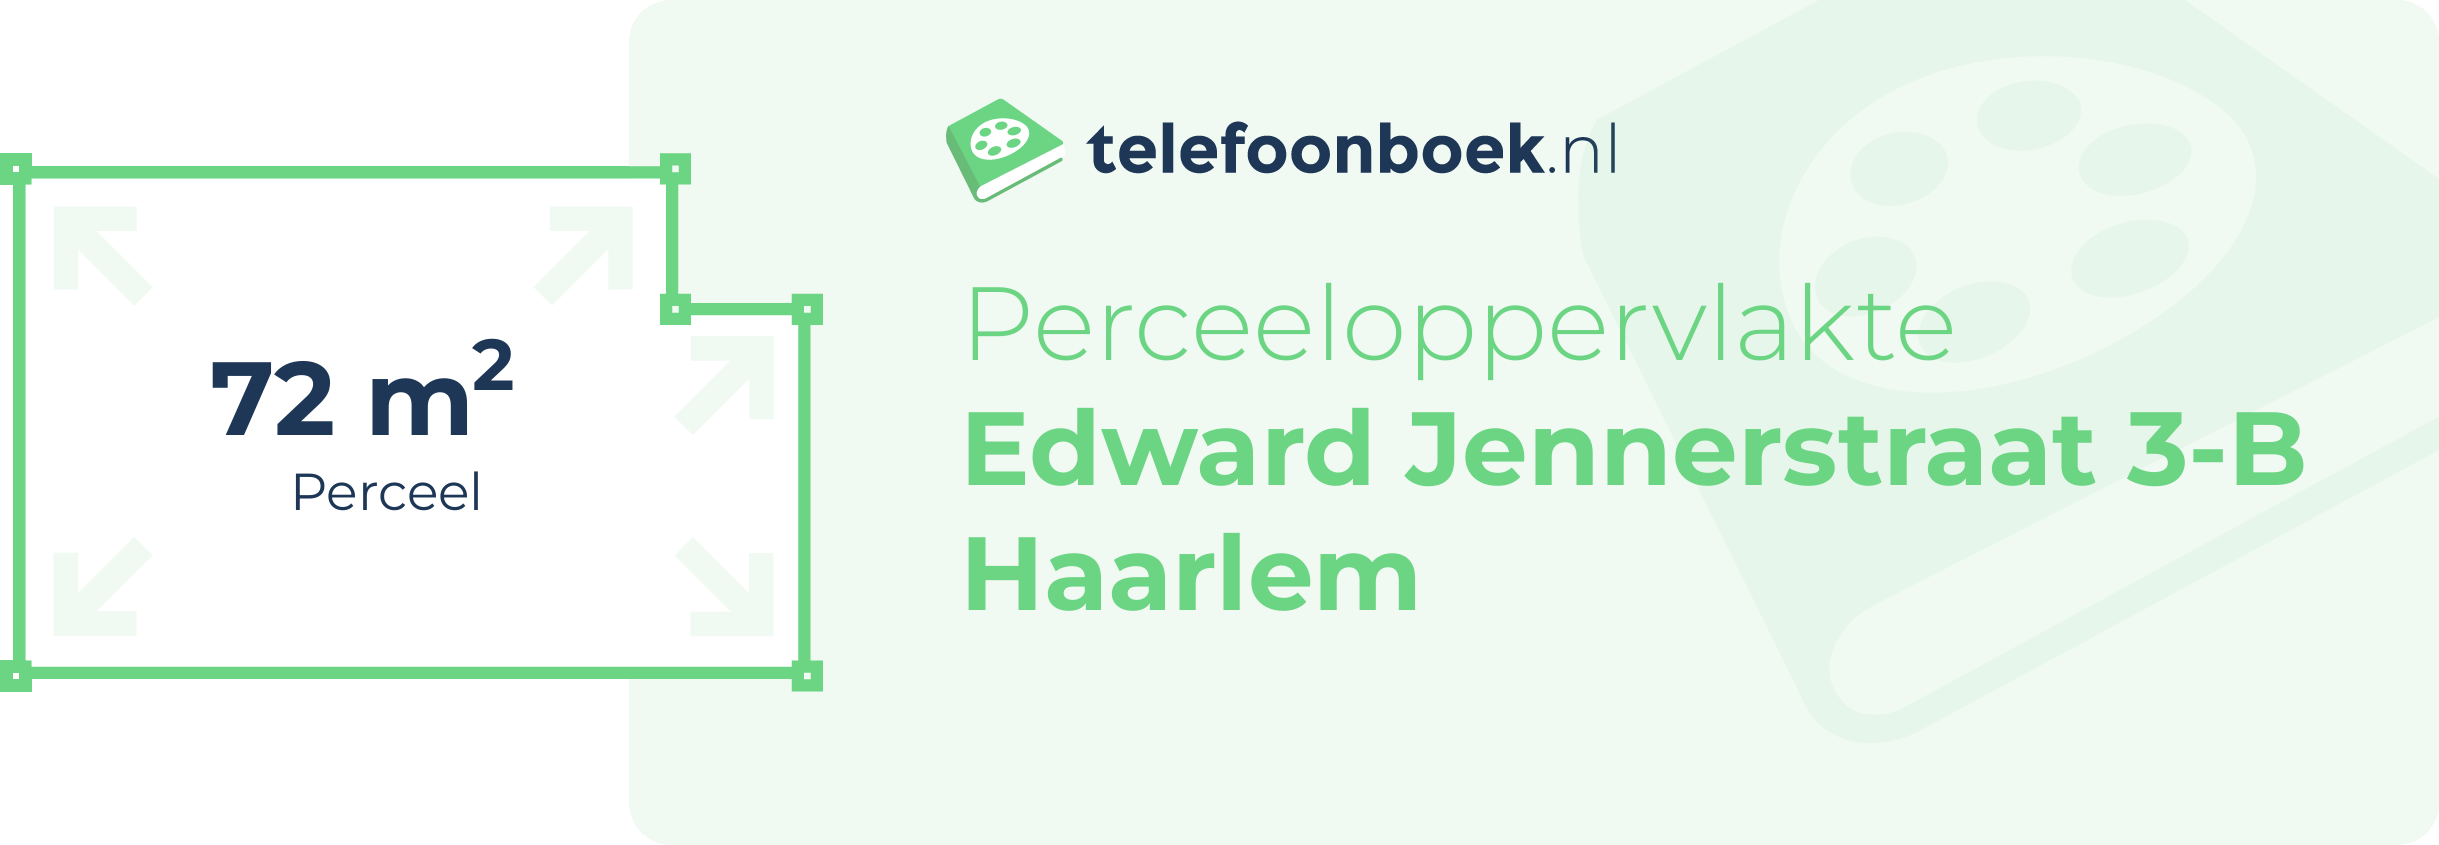 Perceeloppervlakte Edward Jennerstraat 3-B Haarlem